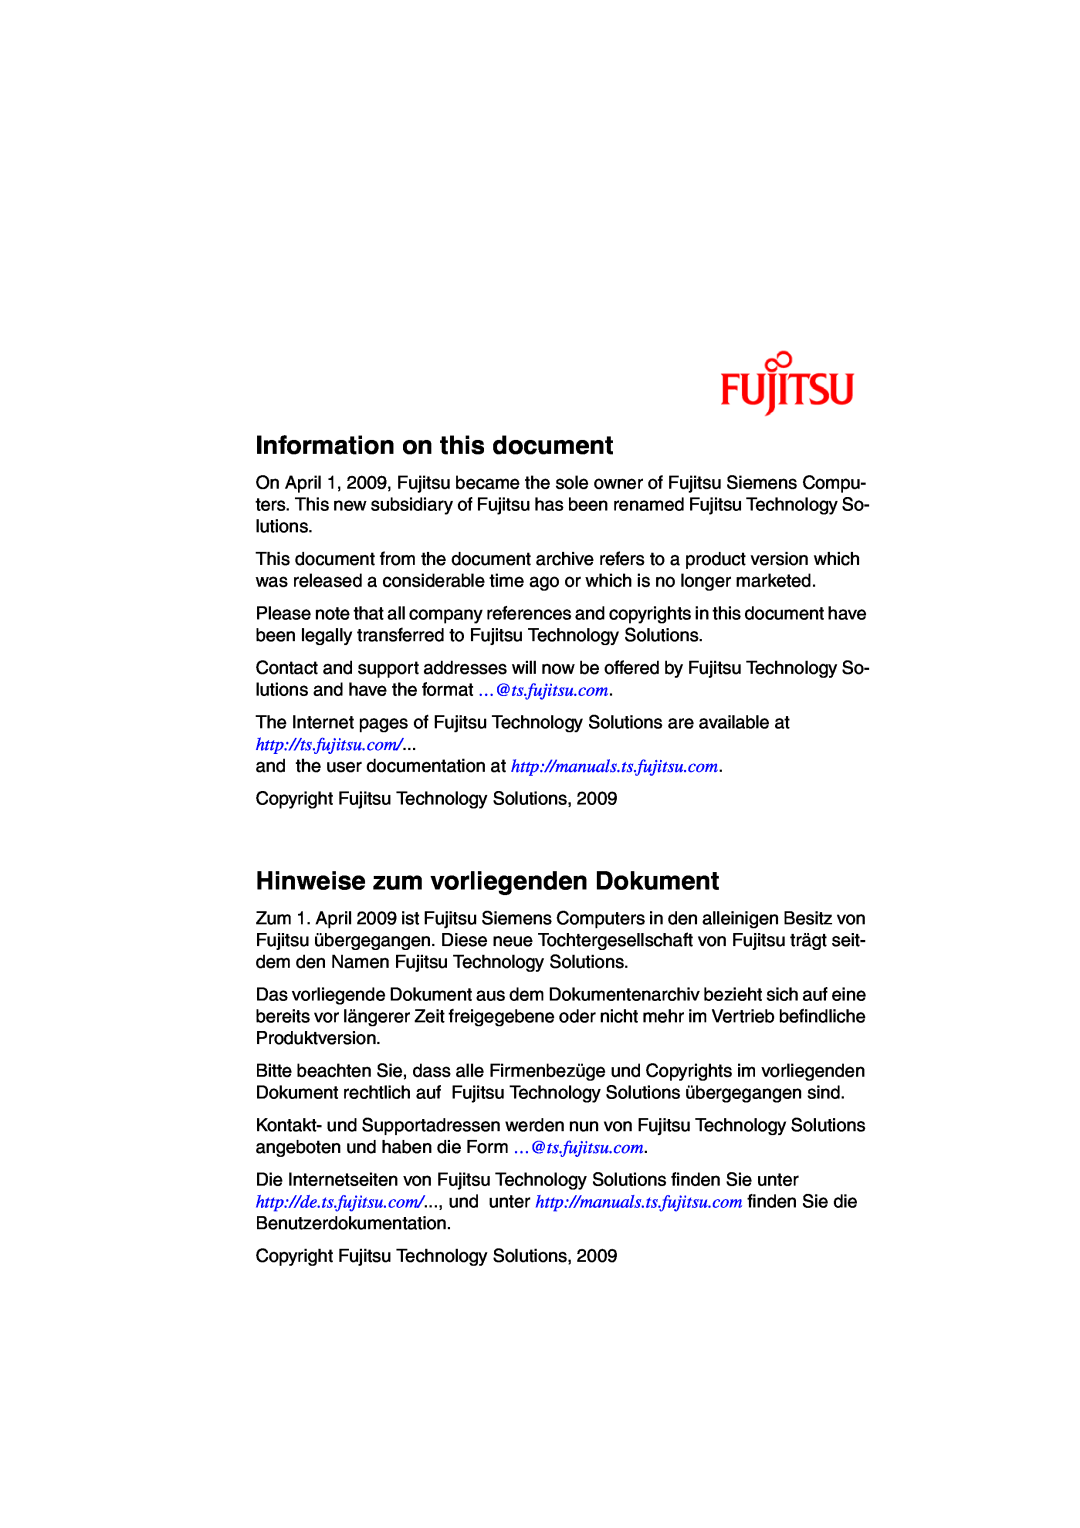 Fujitsu TX150 S3 manual Information on this document, Hinweise zum vorliegenden Dokument, http//ts.fujitsu.com 